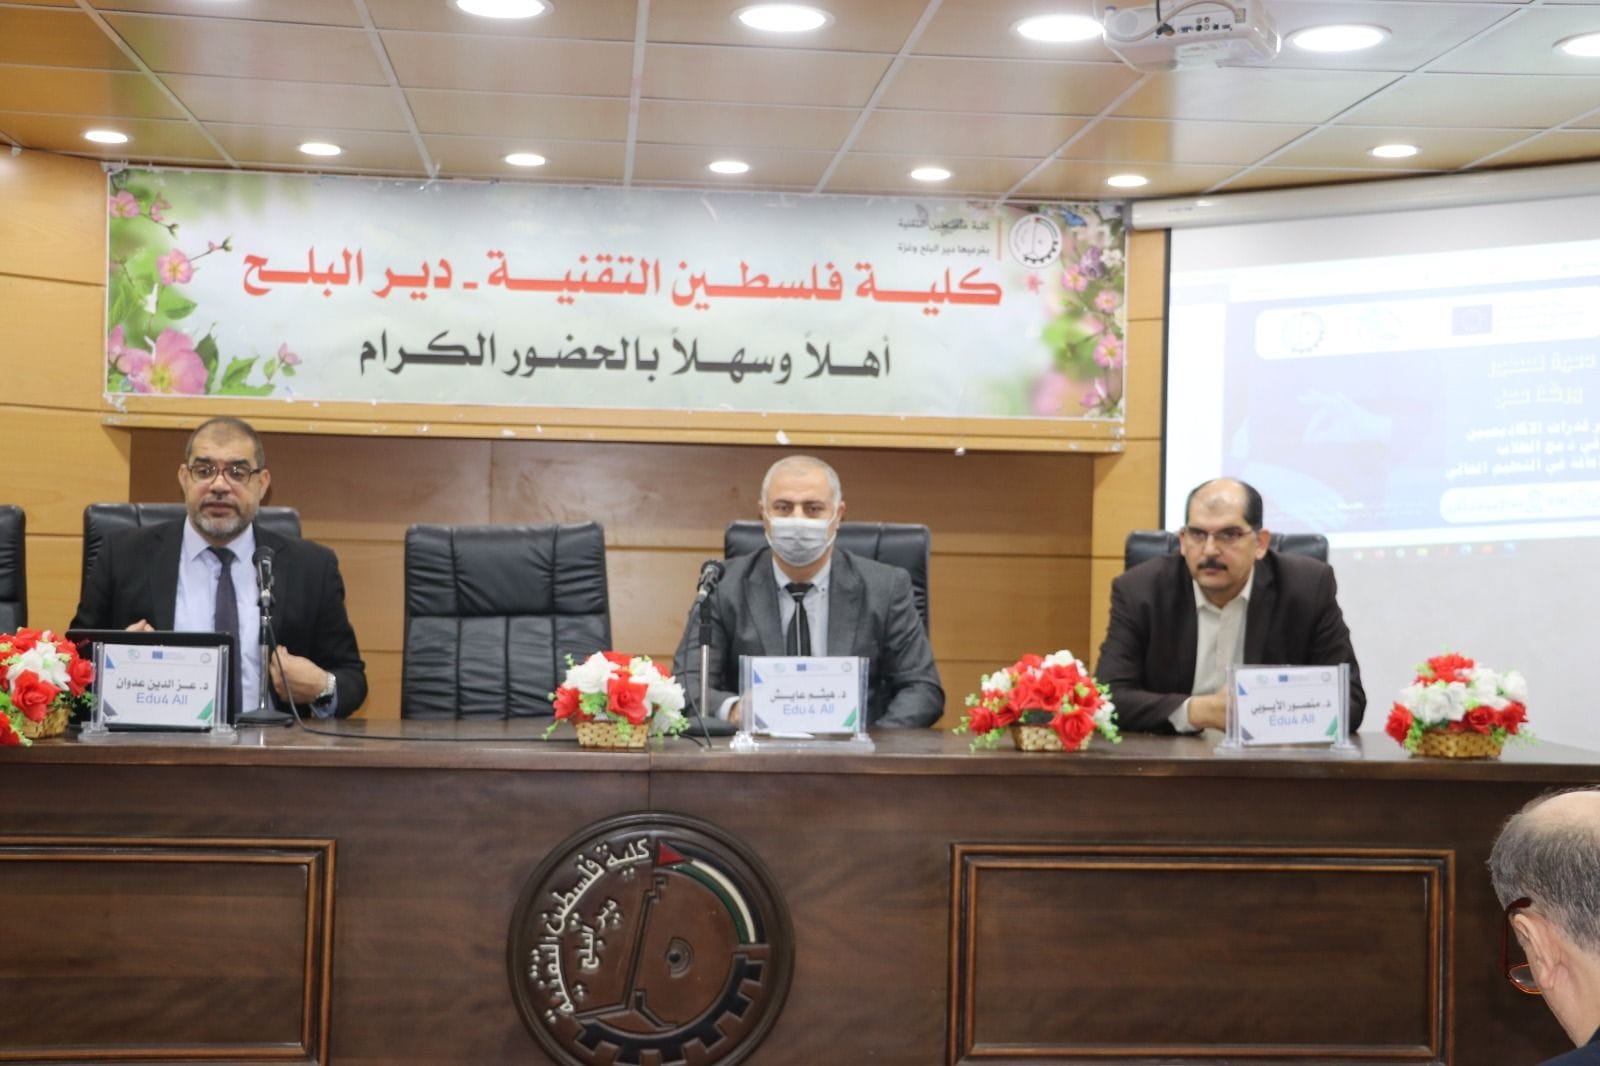 Edu4ALL Workshop at PTC Deir Al-Balah three Doctors